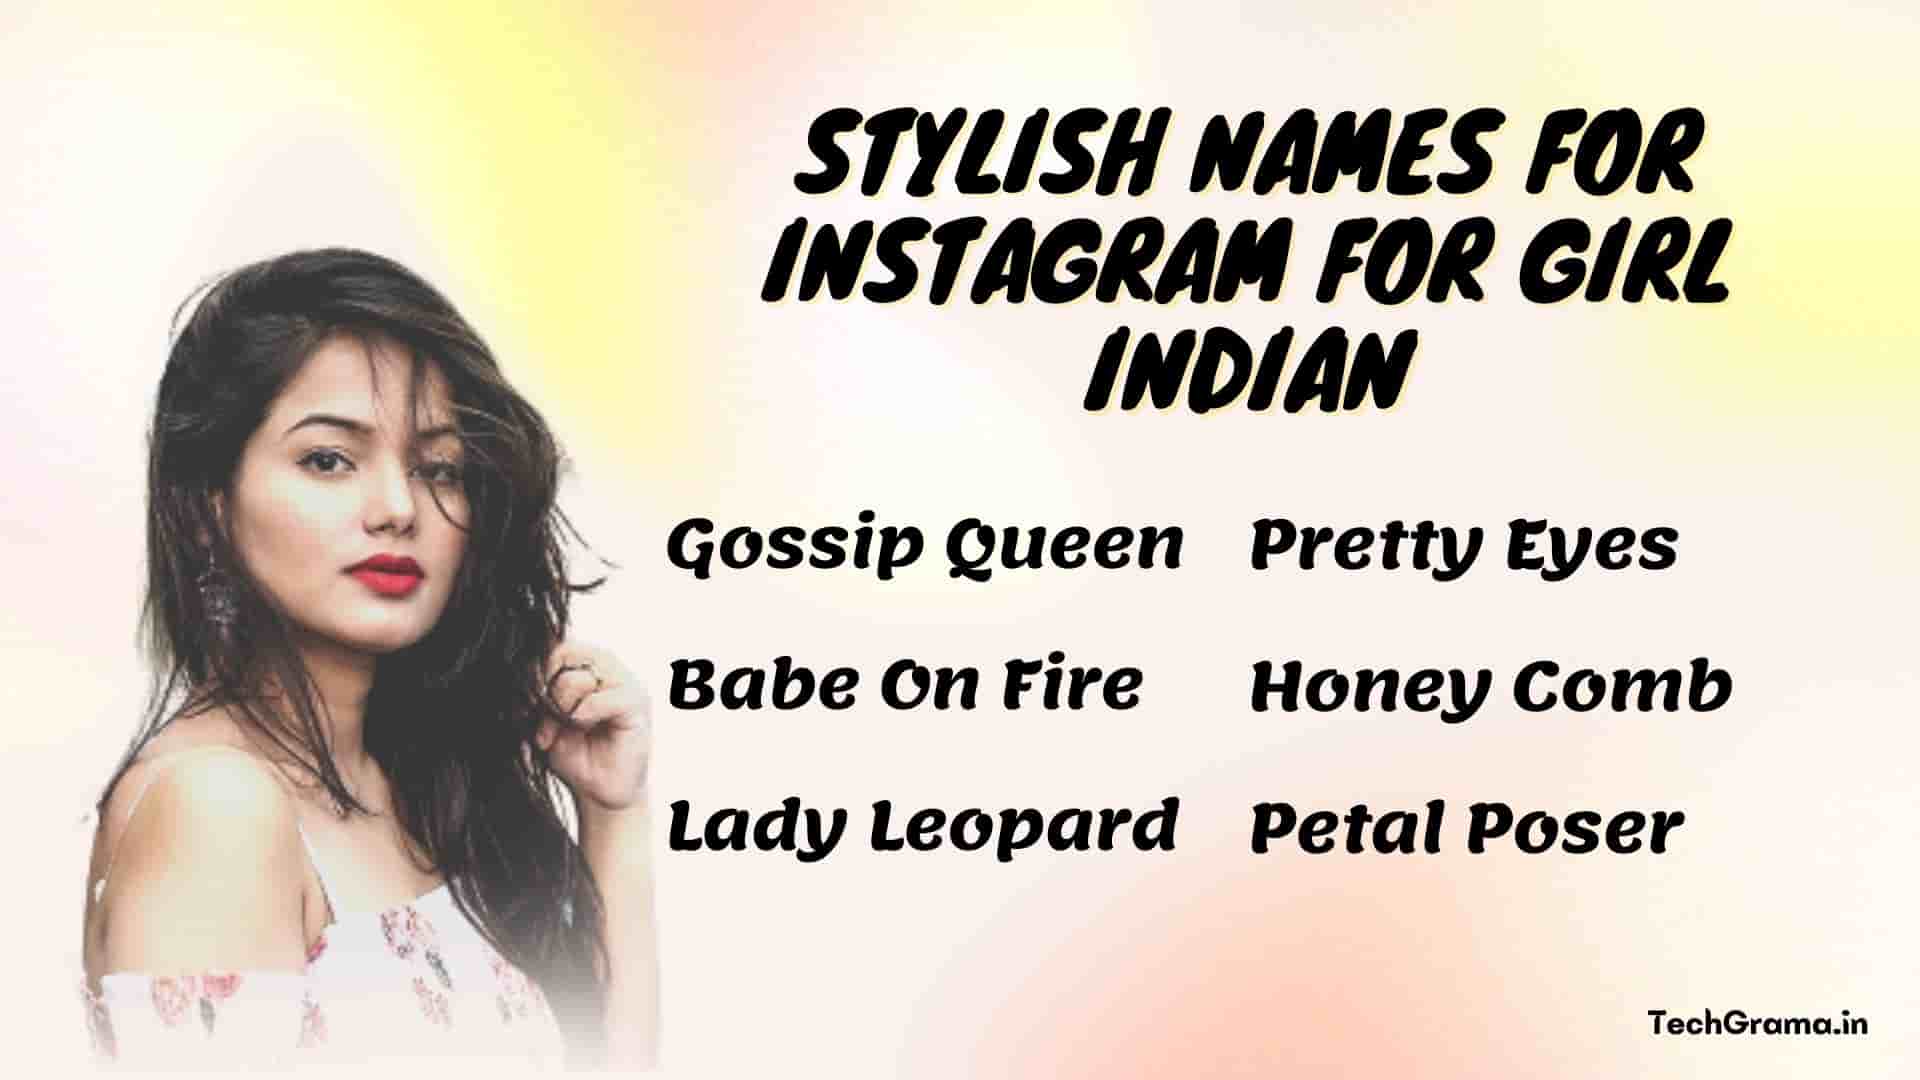 Best Stylish Attitude Names For Instagram For Girl Indian, Attitude Names For Girl Indian, Stylish Names For Instagram For Girl Indian, Stylish Attitude Names For Instagram For Girl in Hindi.